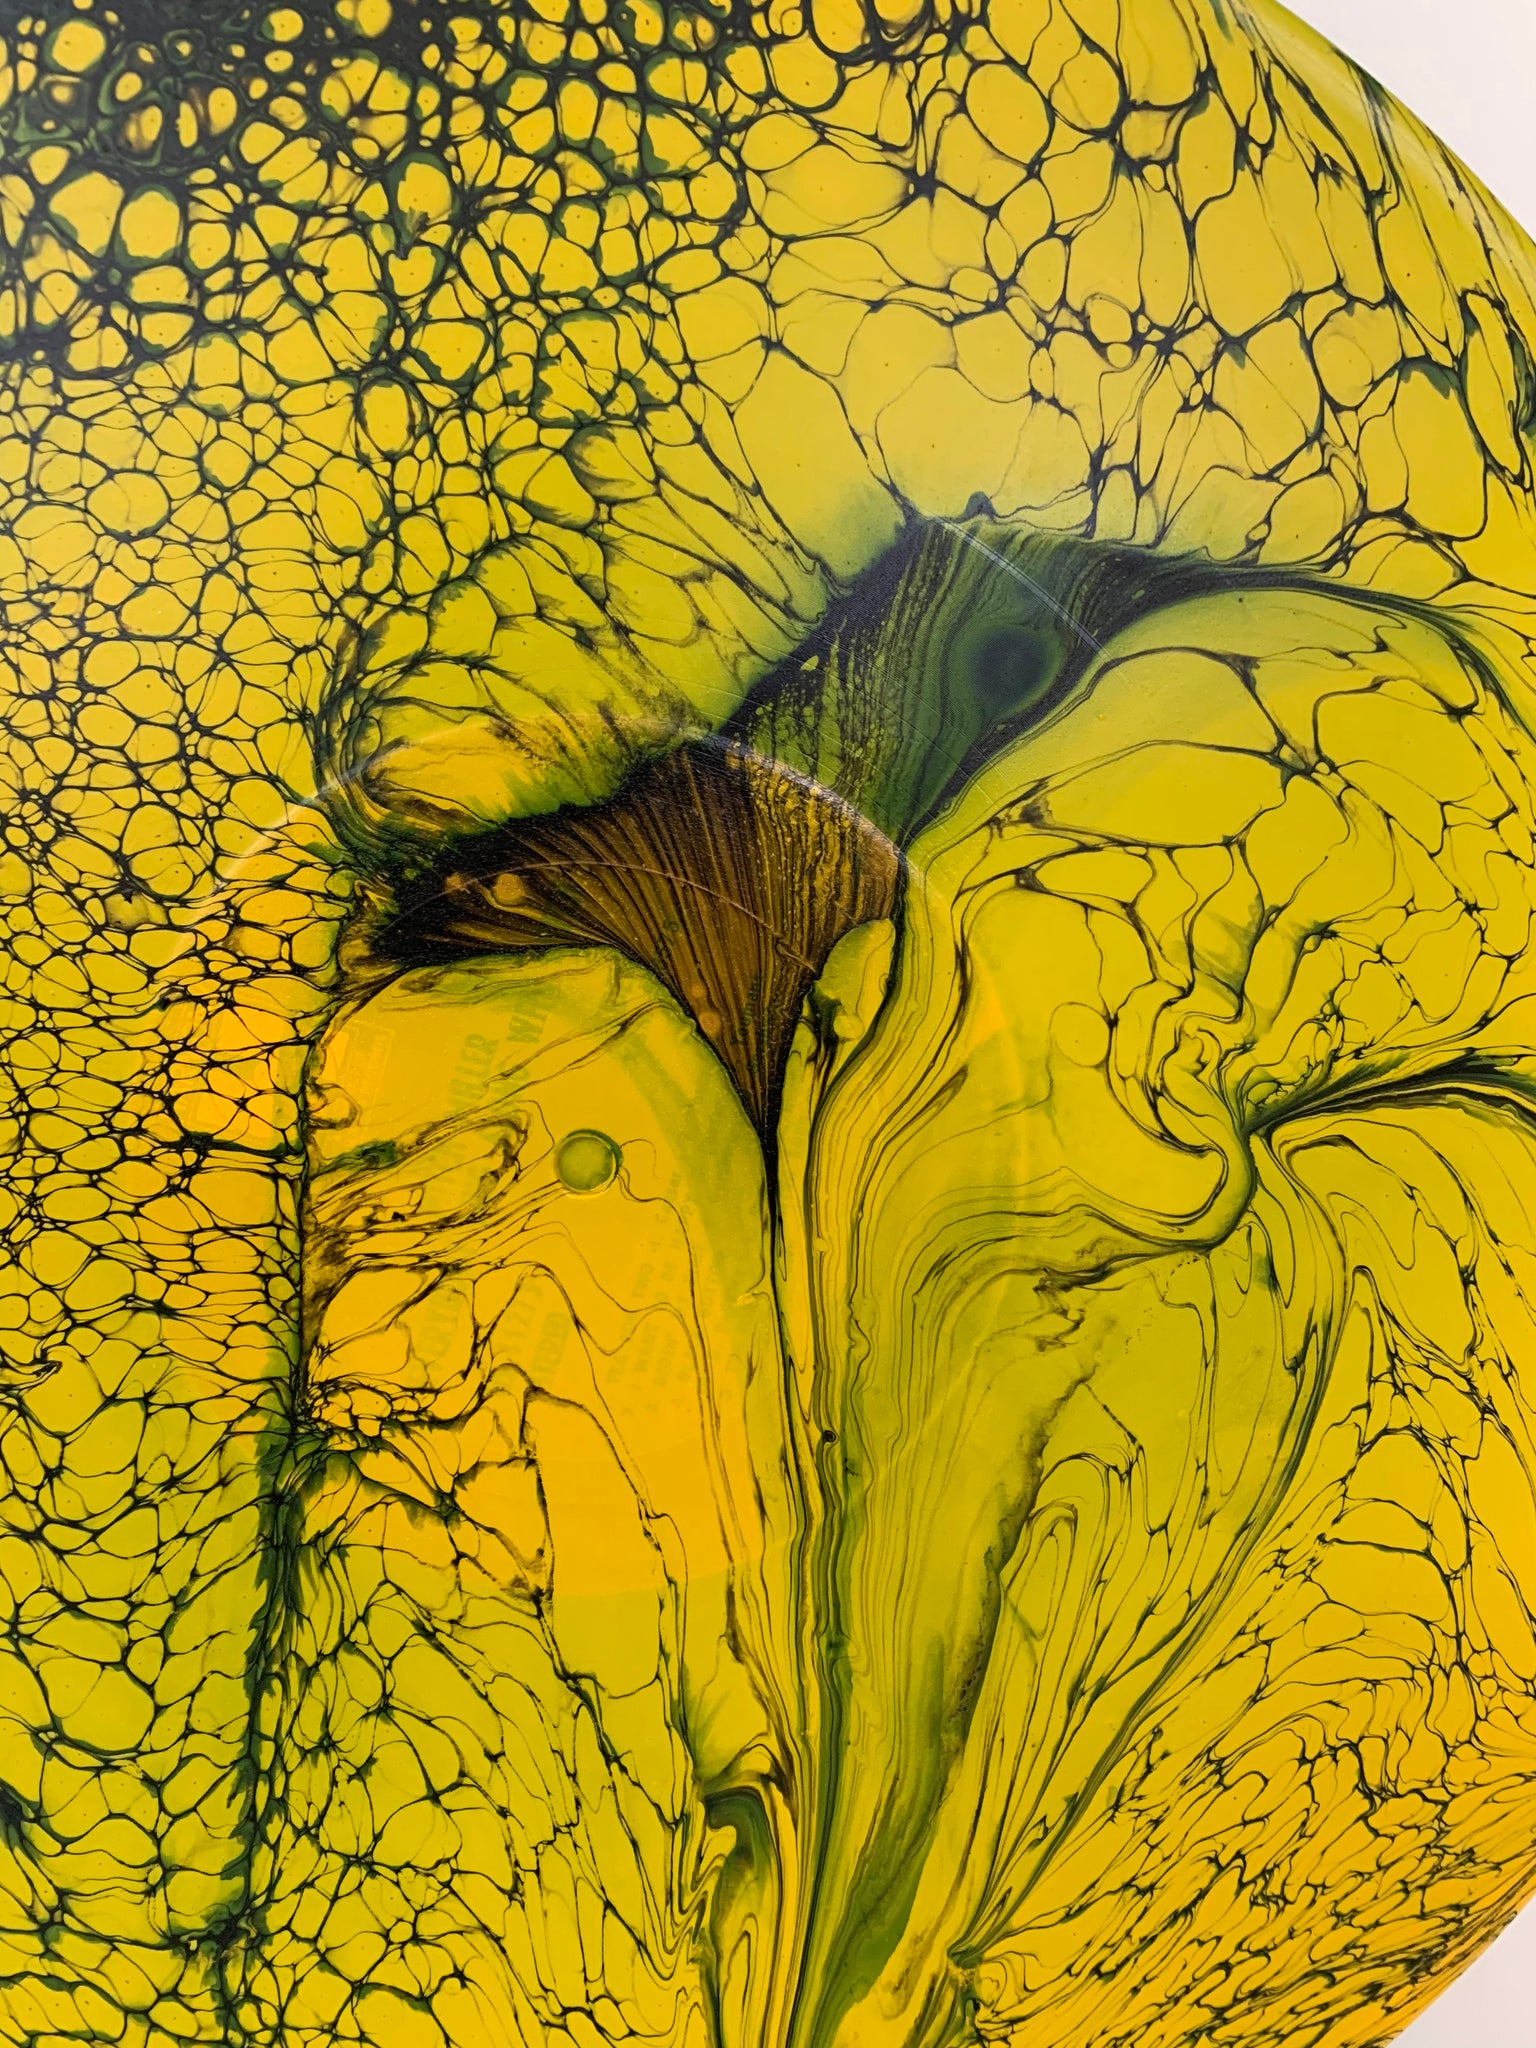 Vinyl Art Painting "Marigold Spider Web" - Ashley Lisl Art